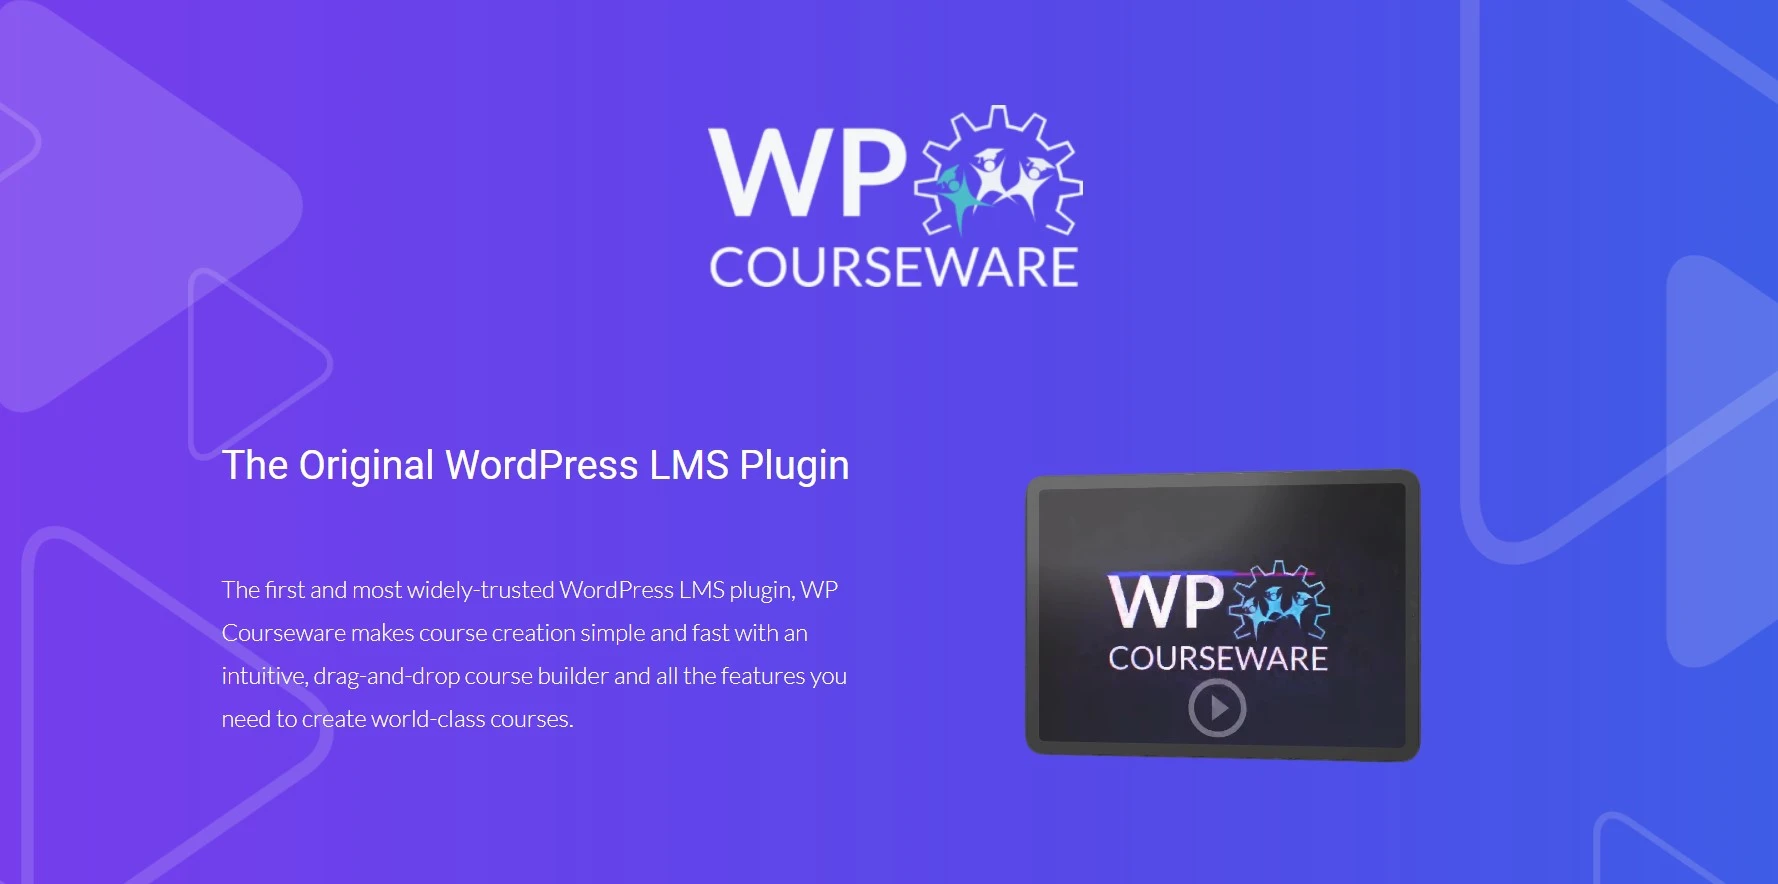 WP courseware wordpress lms